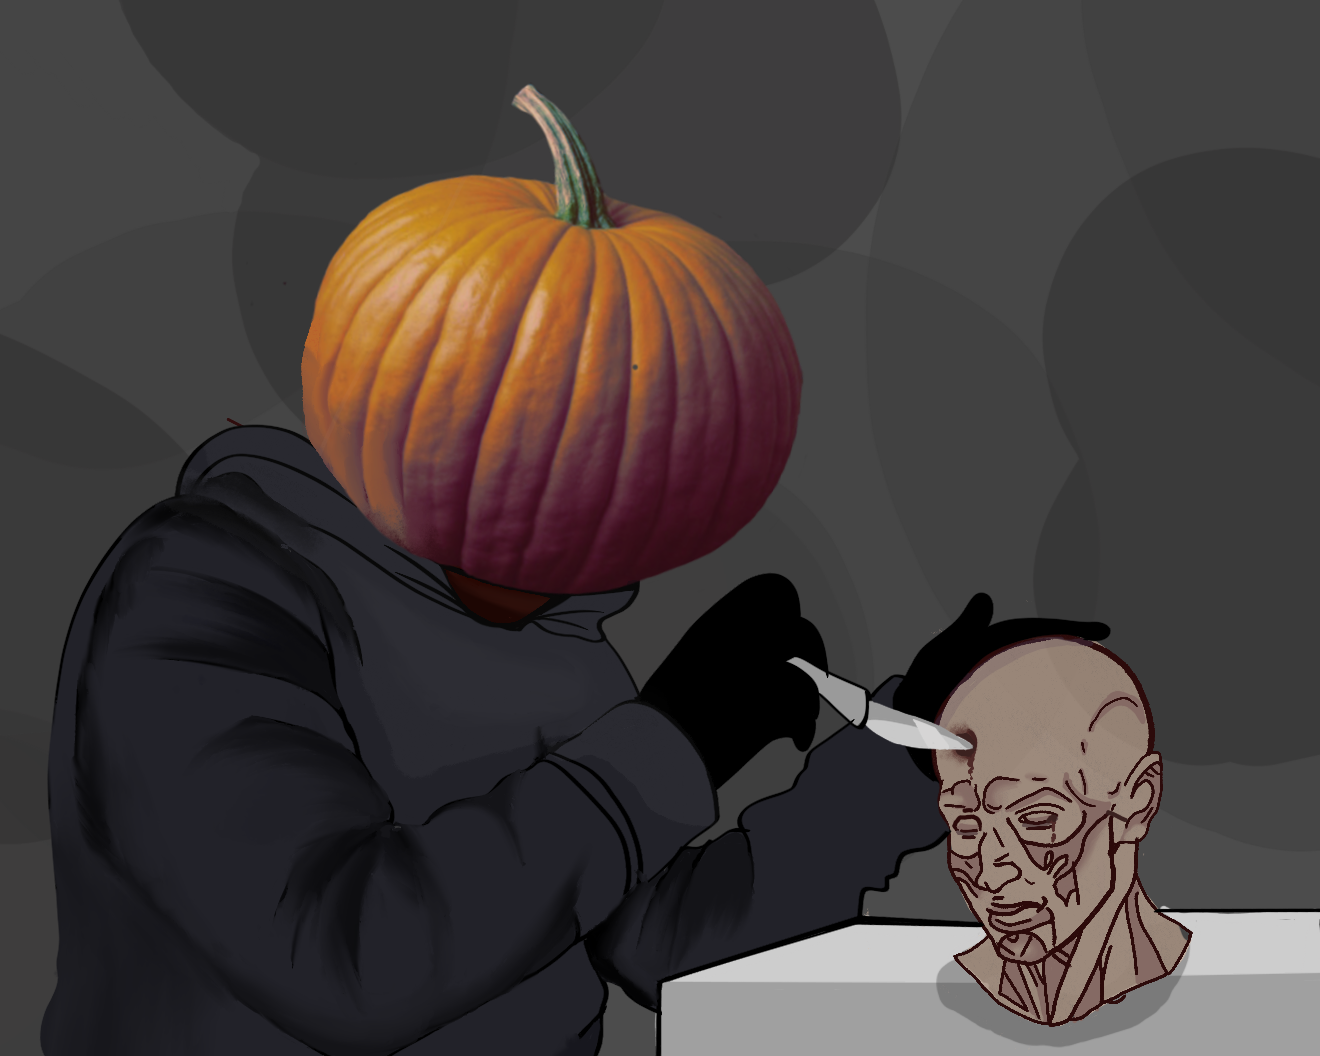 A pumpkin-headed figure is carving a human head